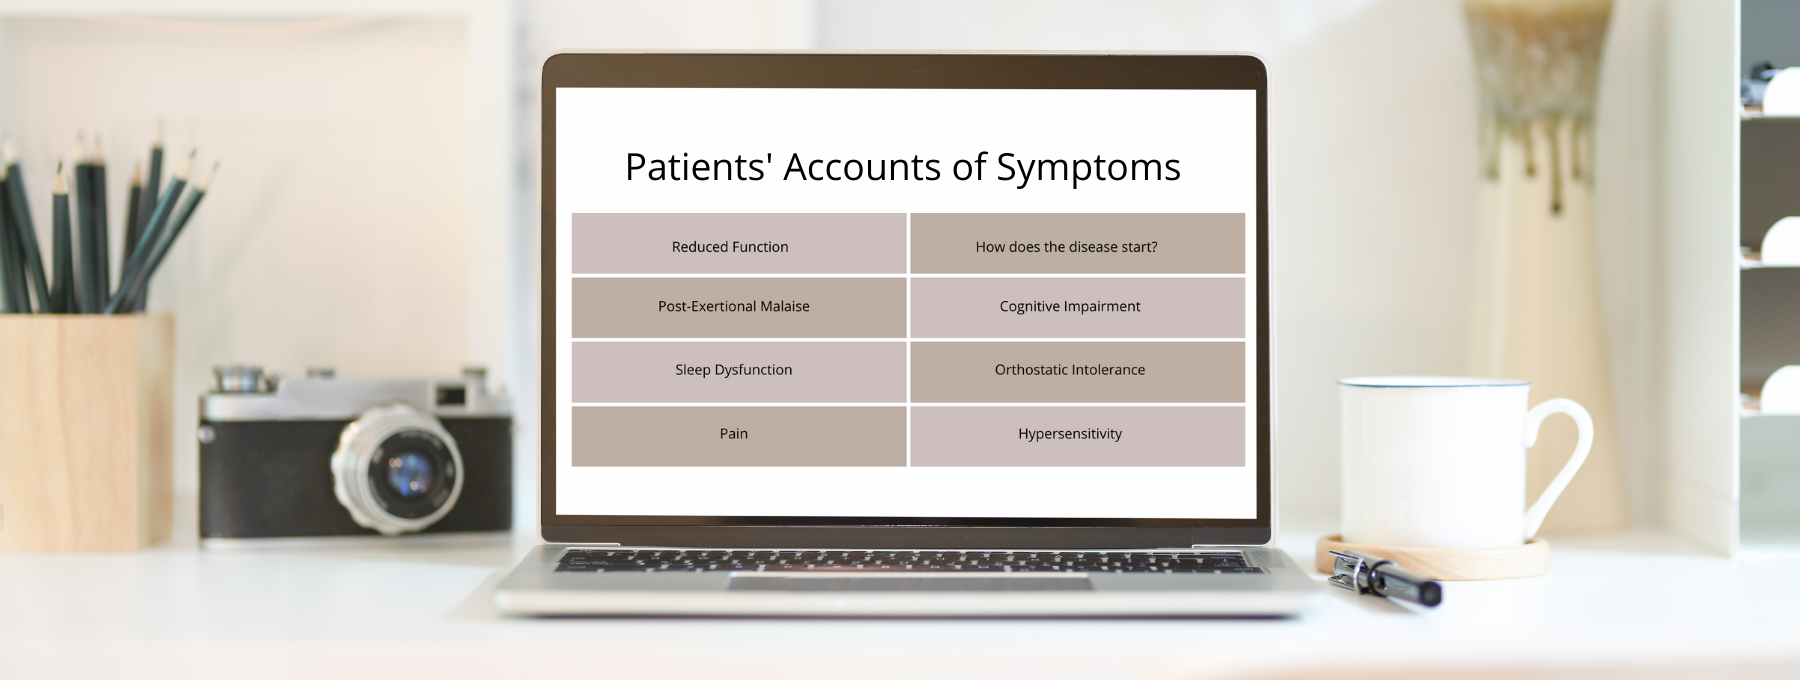 Videos Patients Accounts of Symptoms 1800 x 680